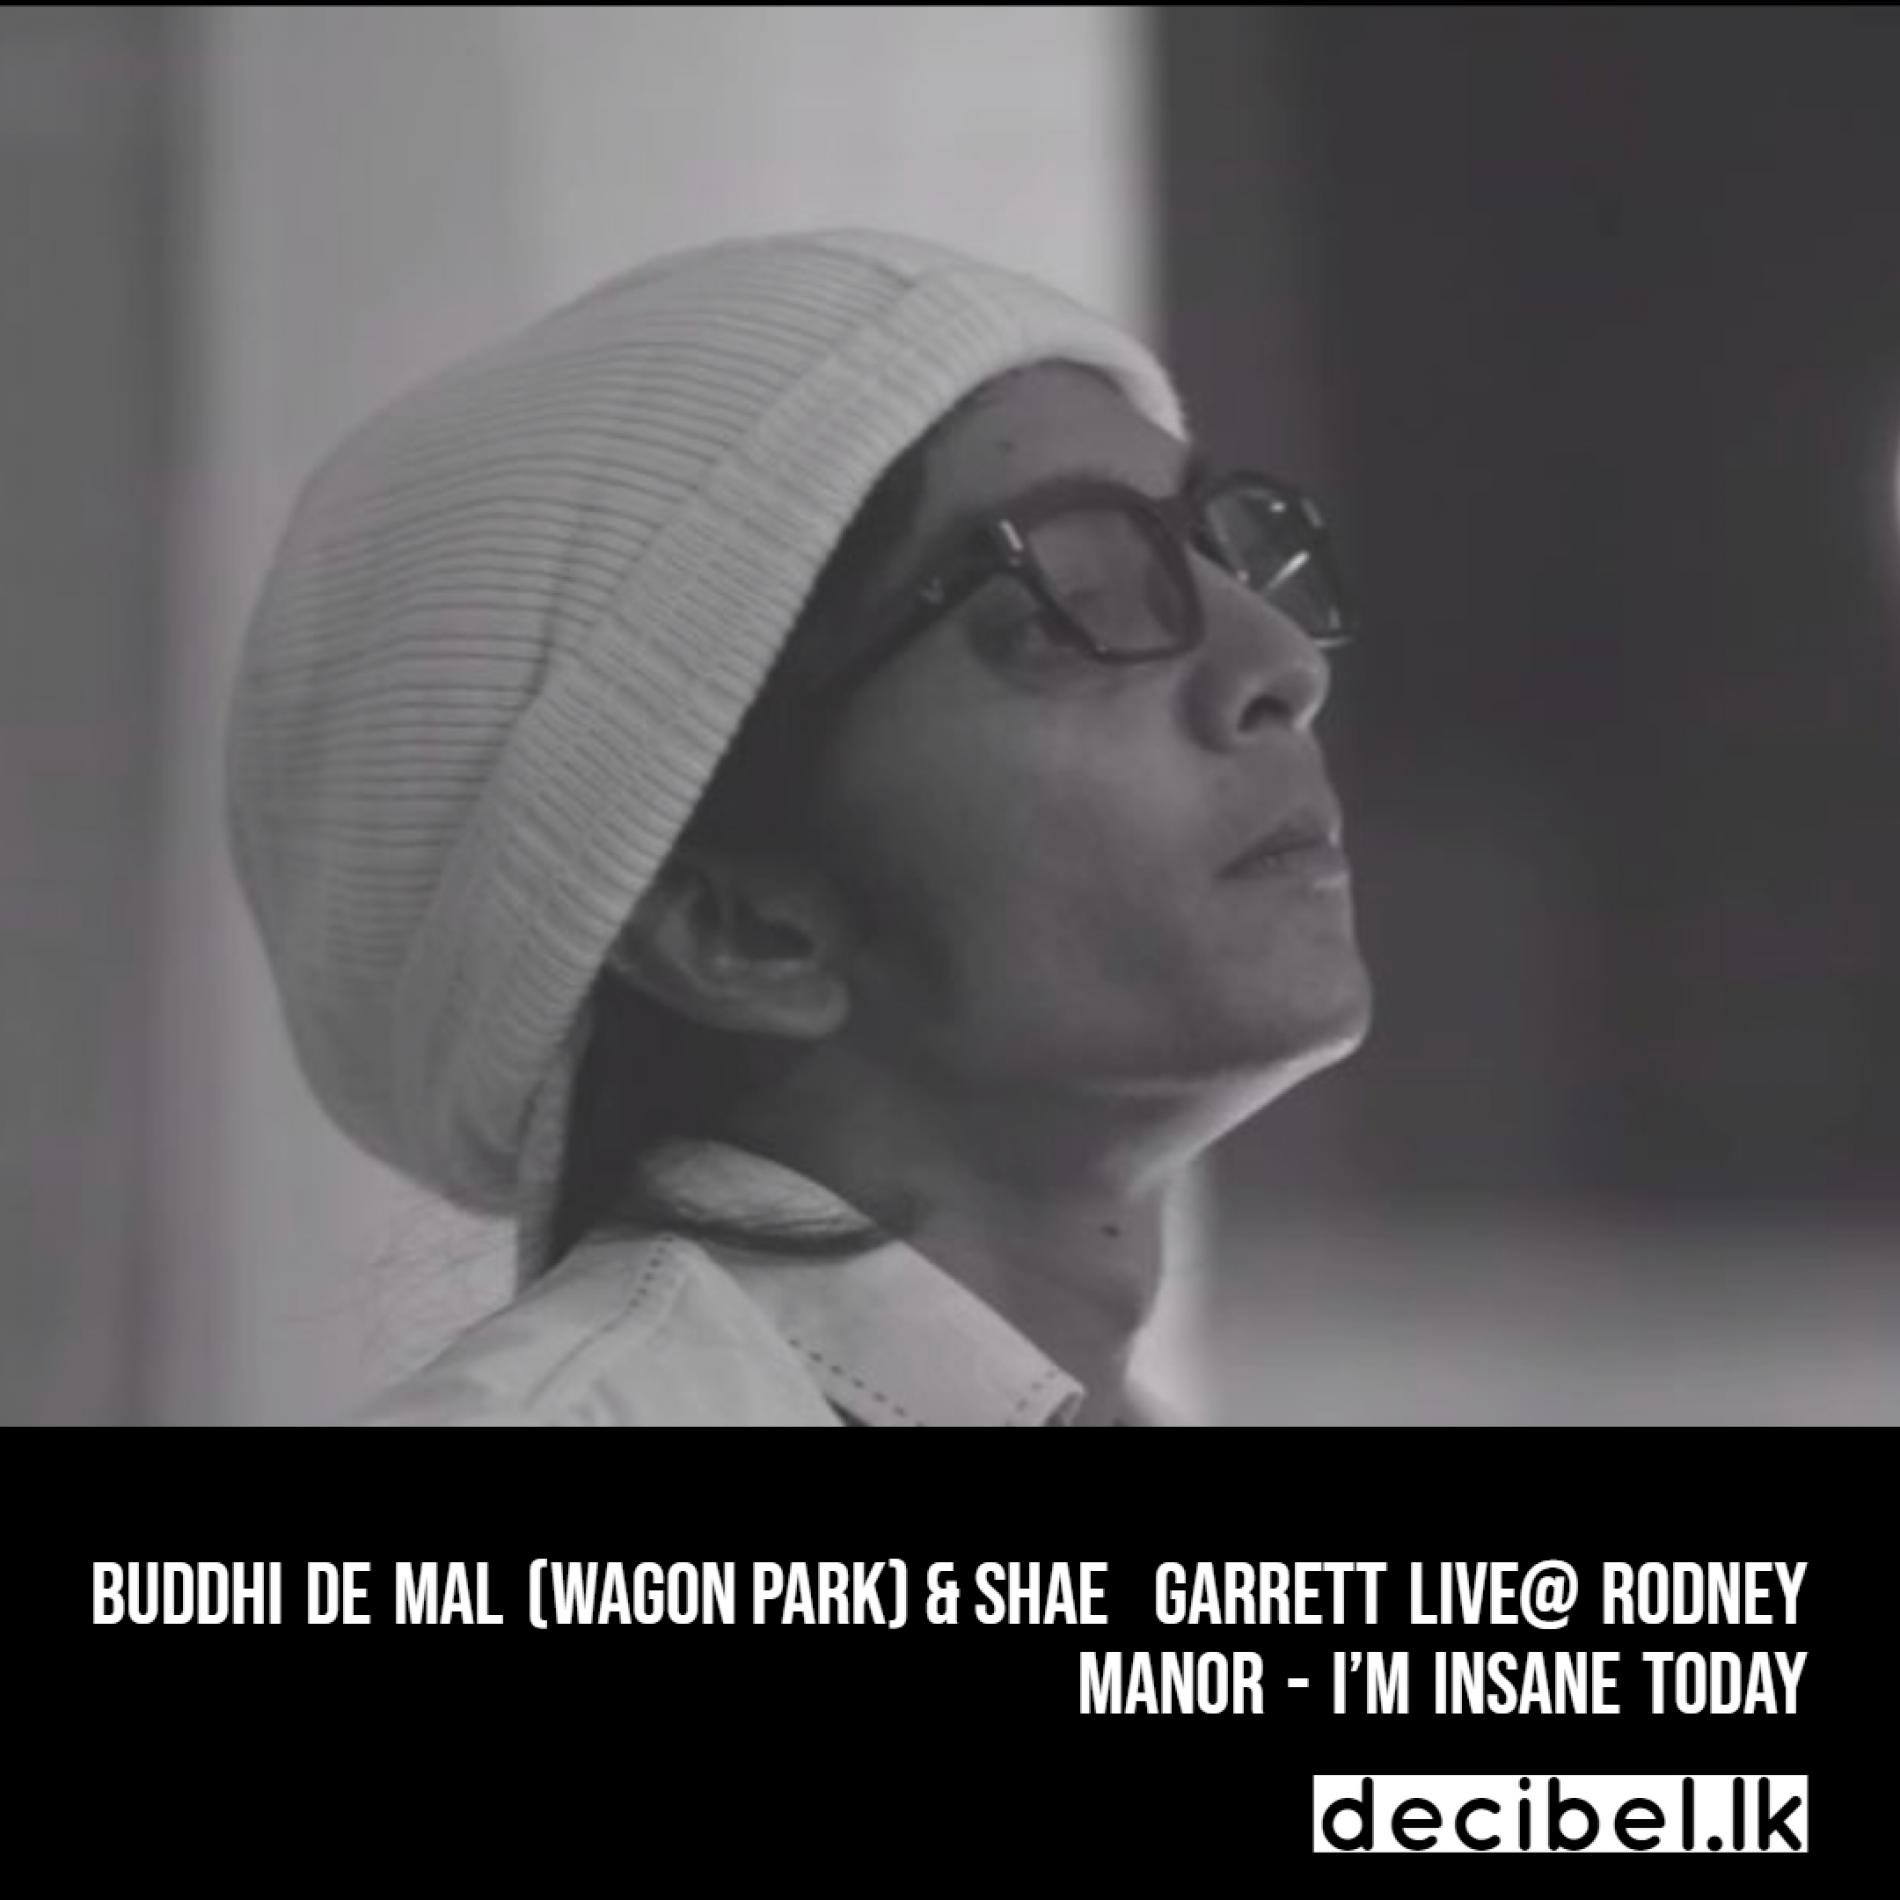 Buddhi de Mal (Wagon Park) & Shae Garrett Live @ Rodney Manor – I’m Insane Today